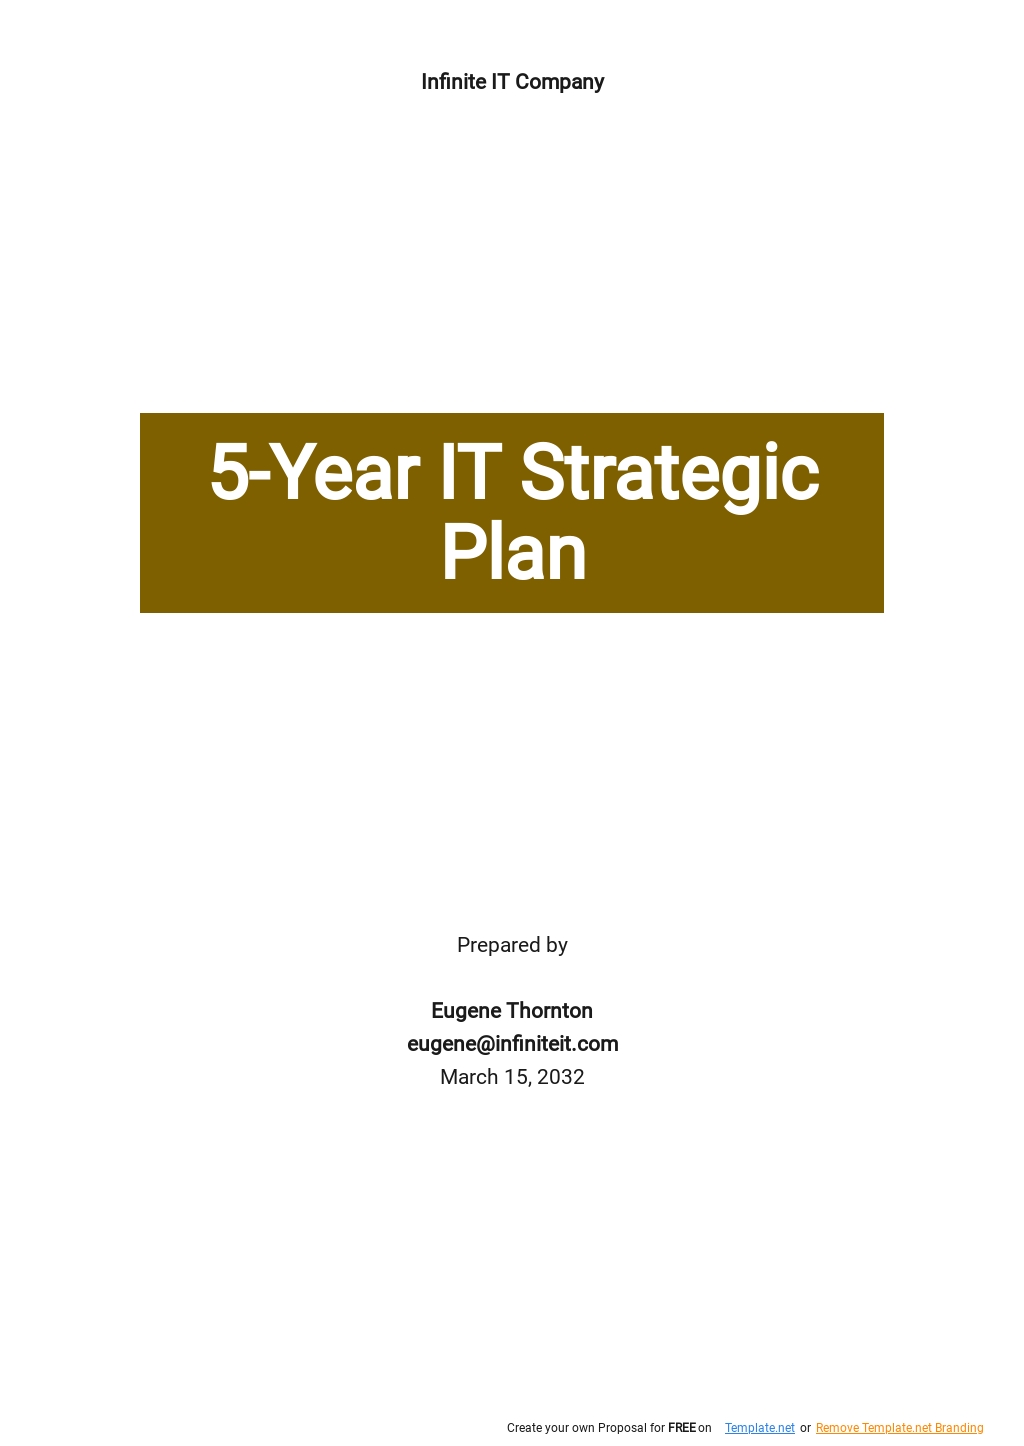 5 Year IT Strategic Plan Template